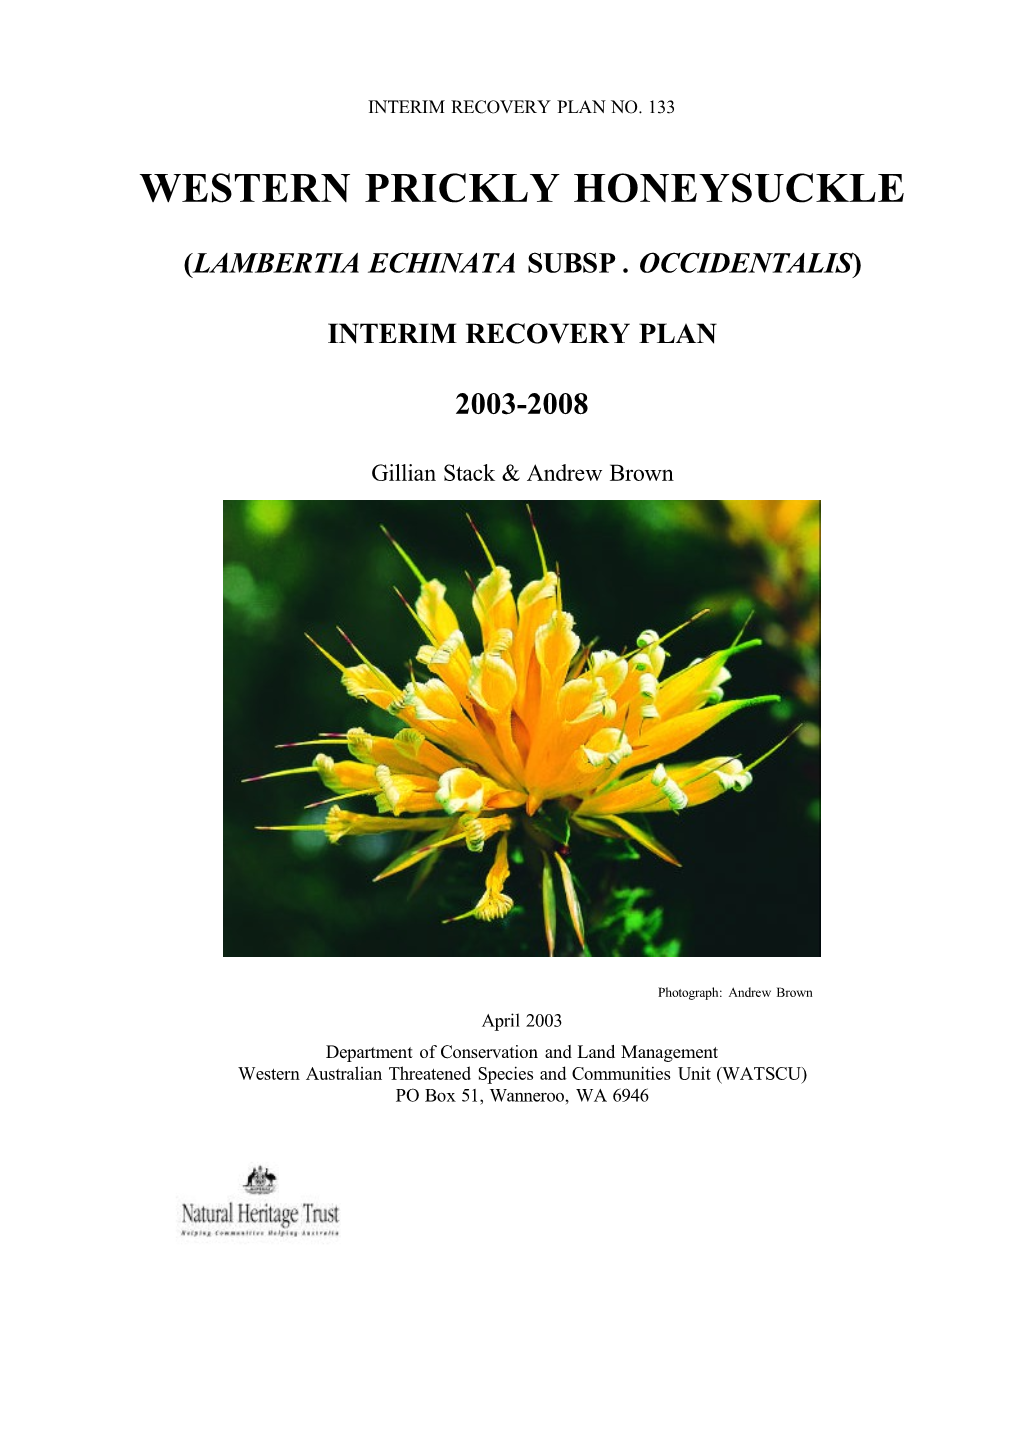 Western Prickly Honeysuckle (Lamberta Echinata Subsp. Occidentalis) Interim Recovery Plan